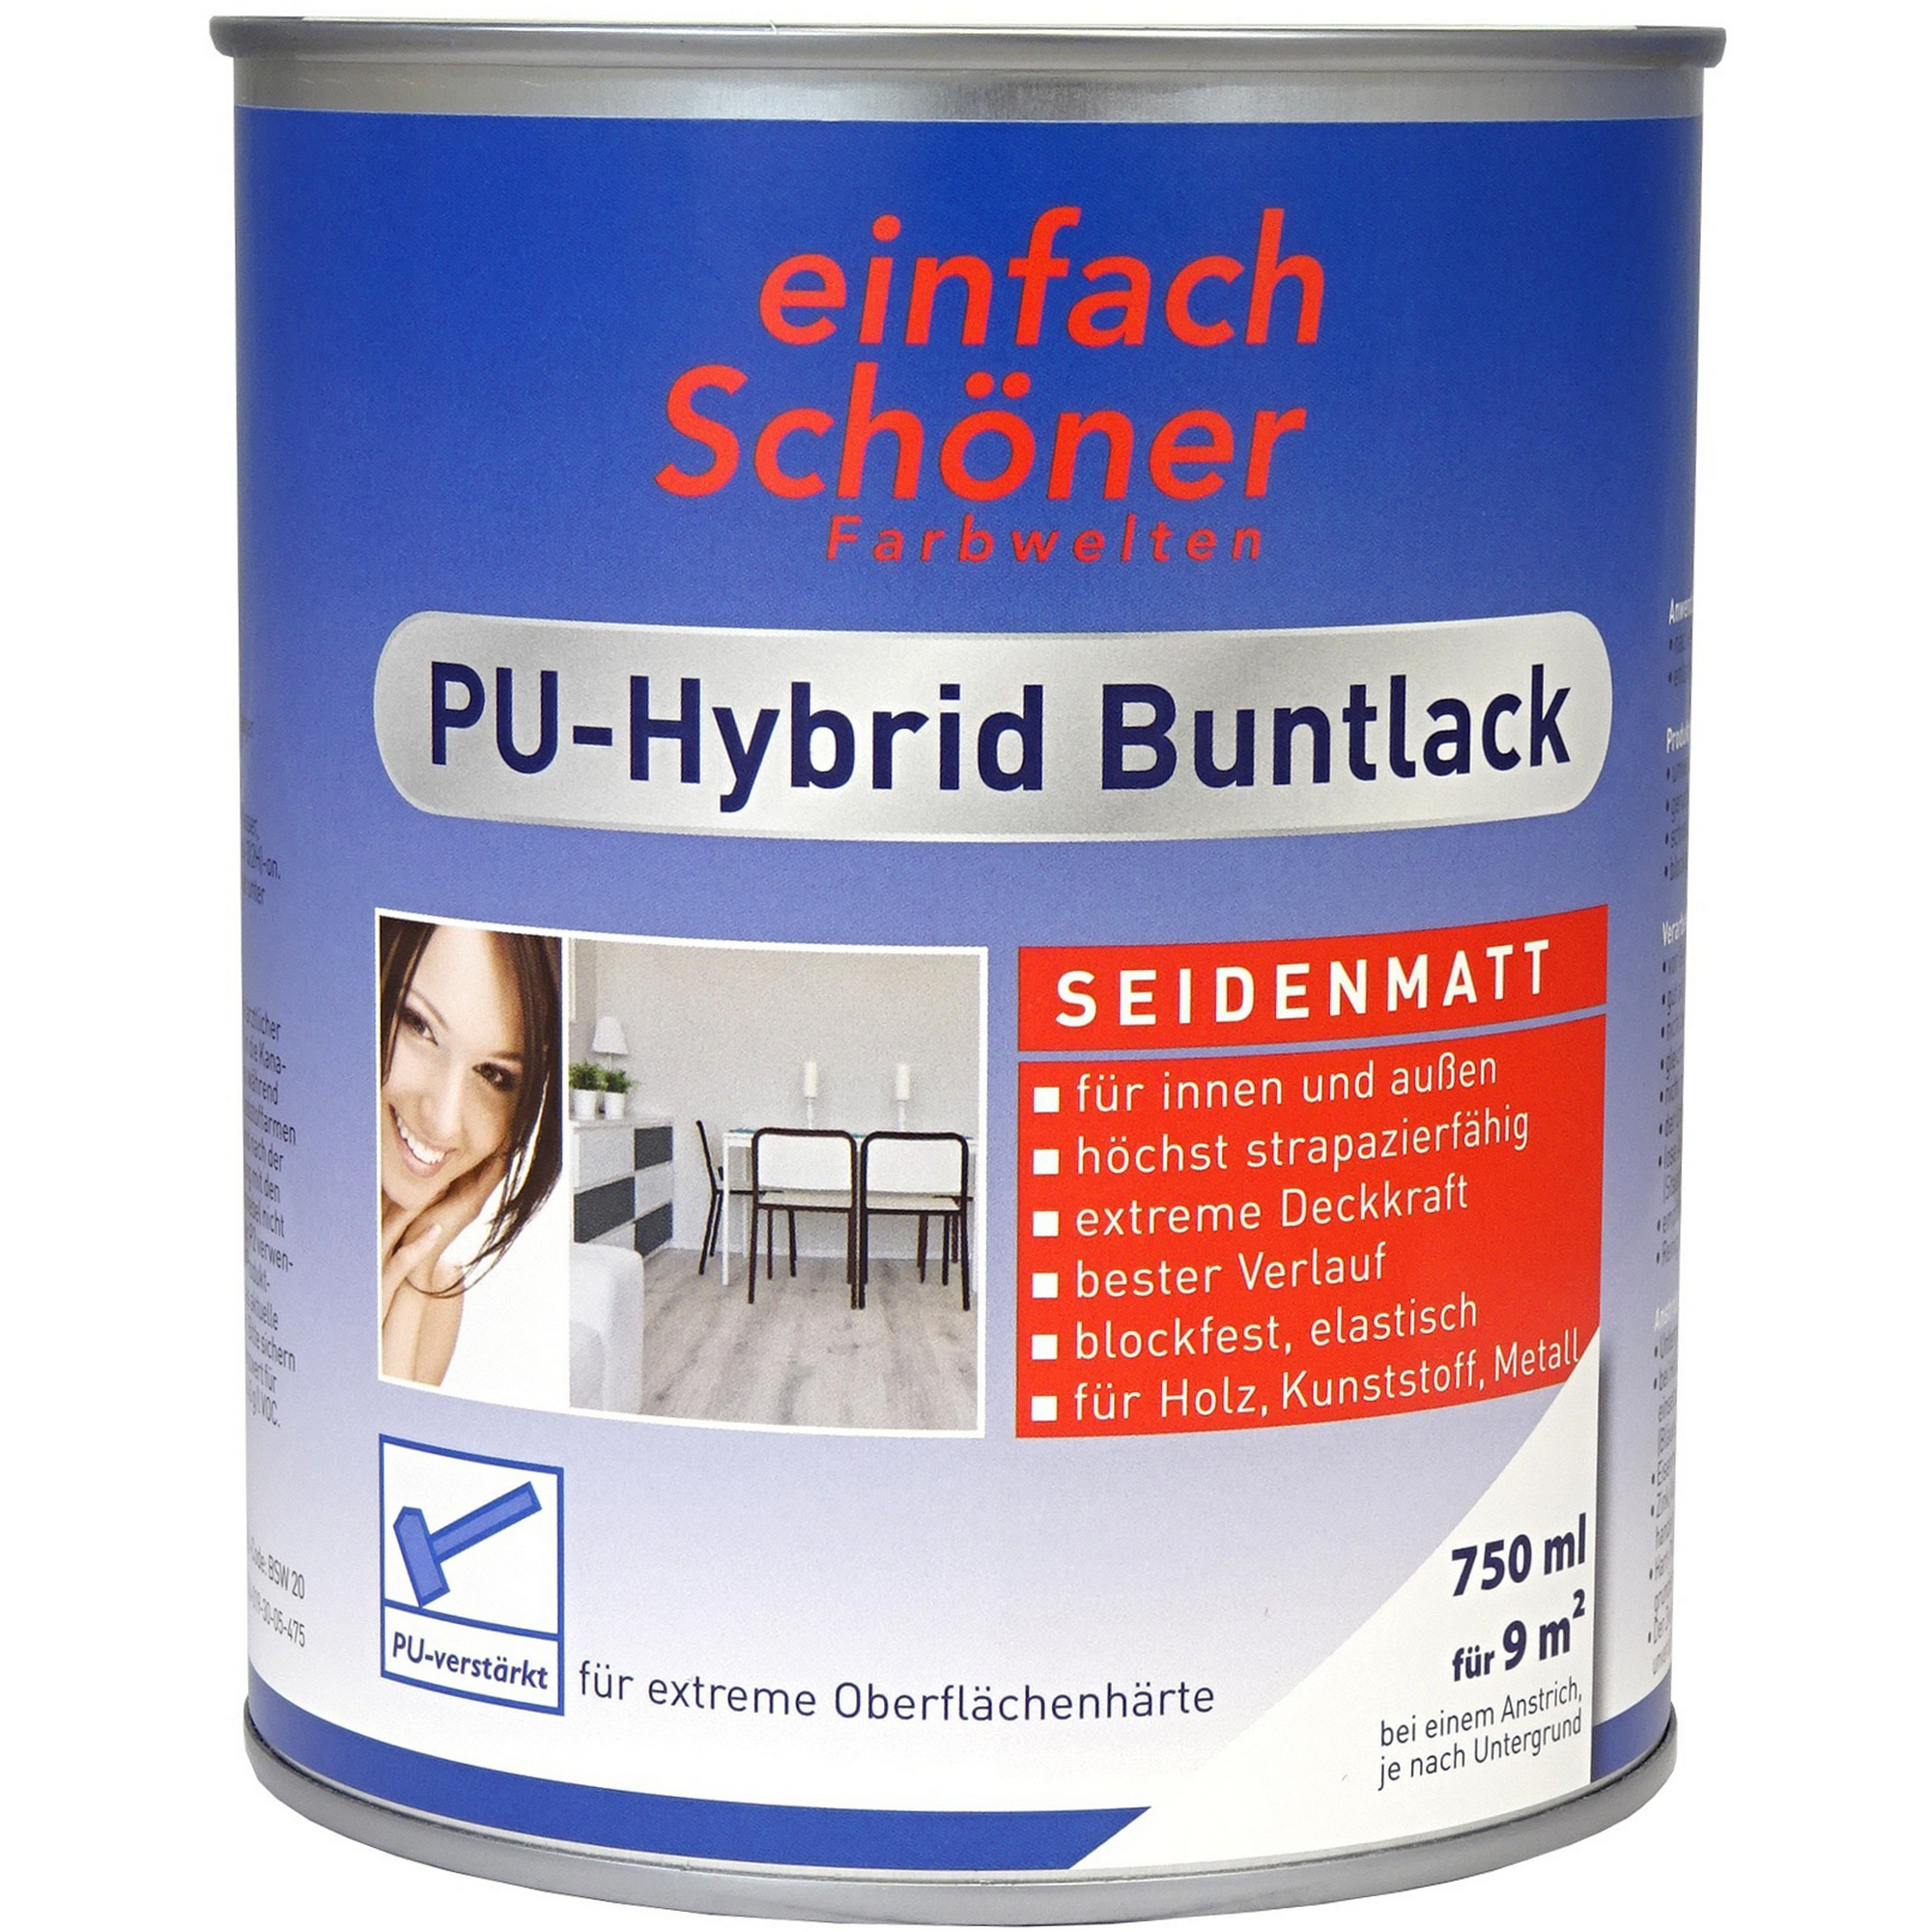 PU-Hybrid Buntlack silbergrau seidenmatt 750 ml + product picture